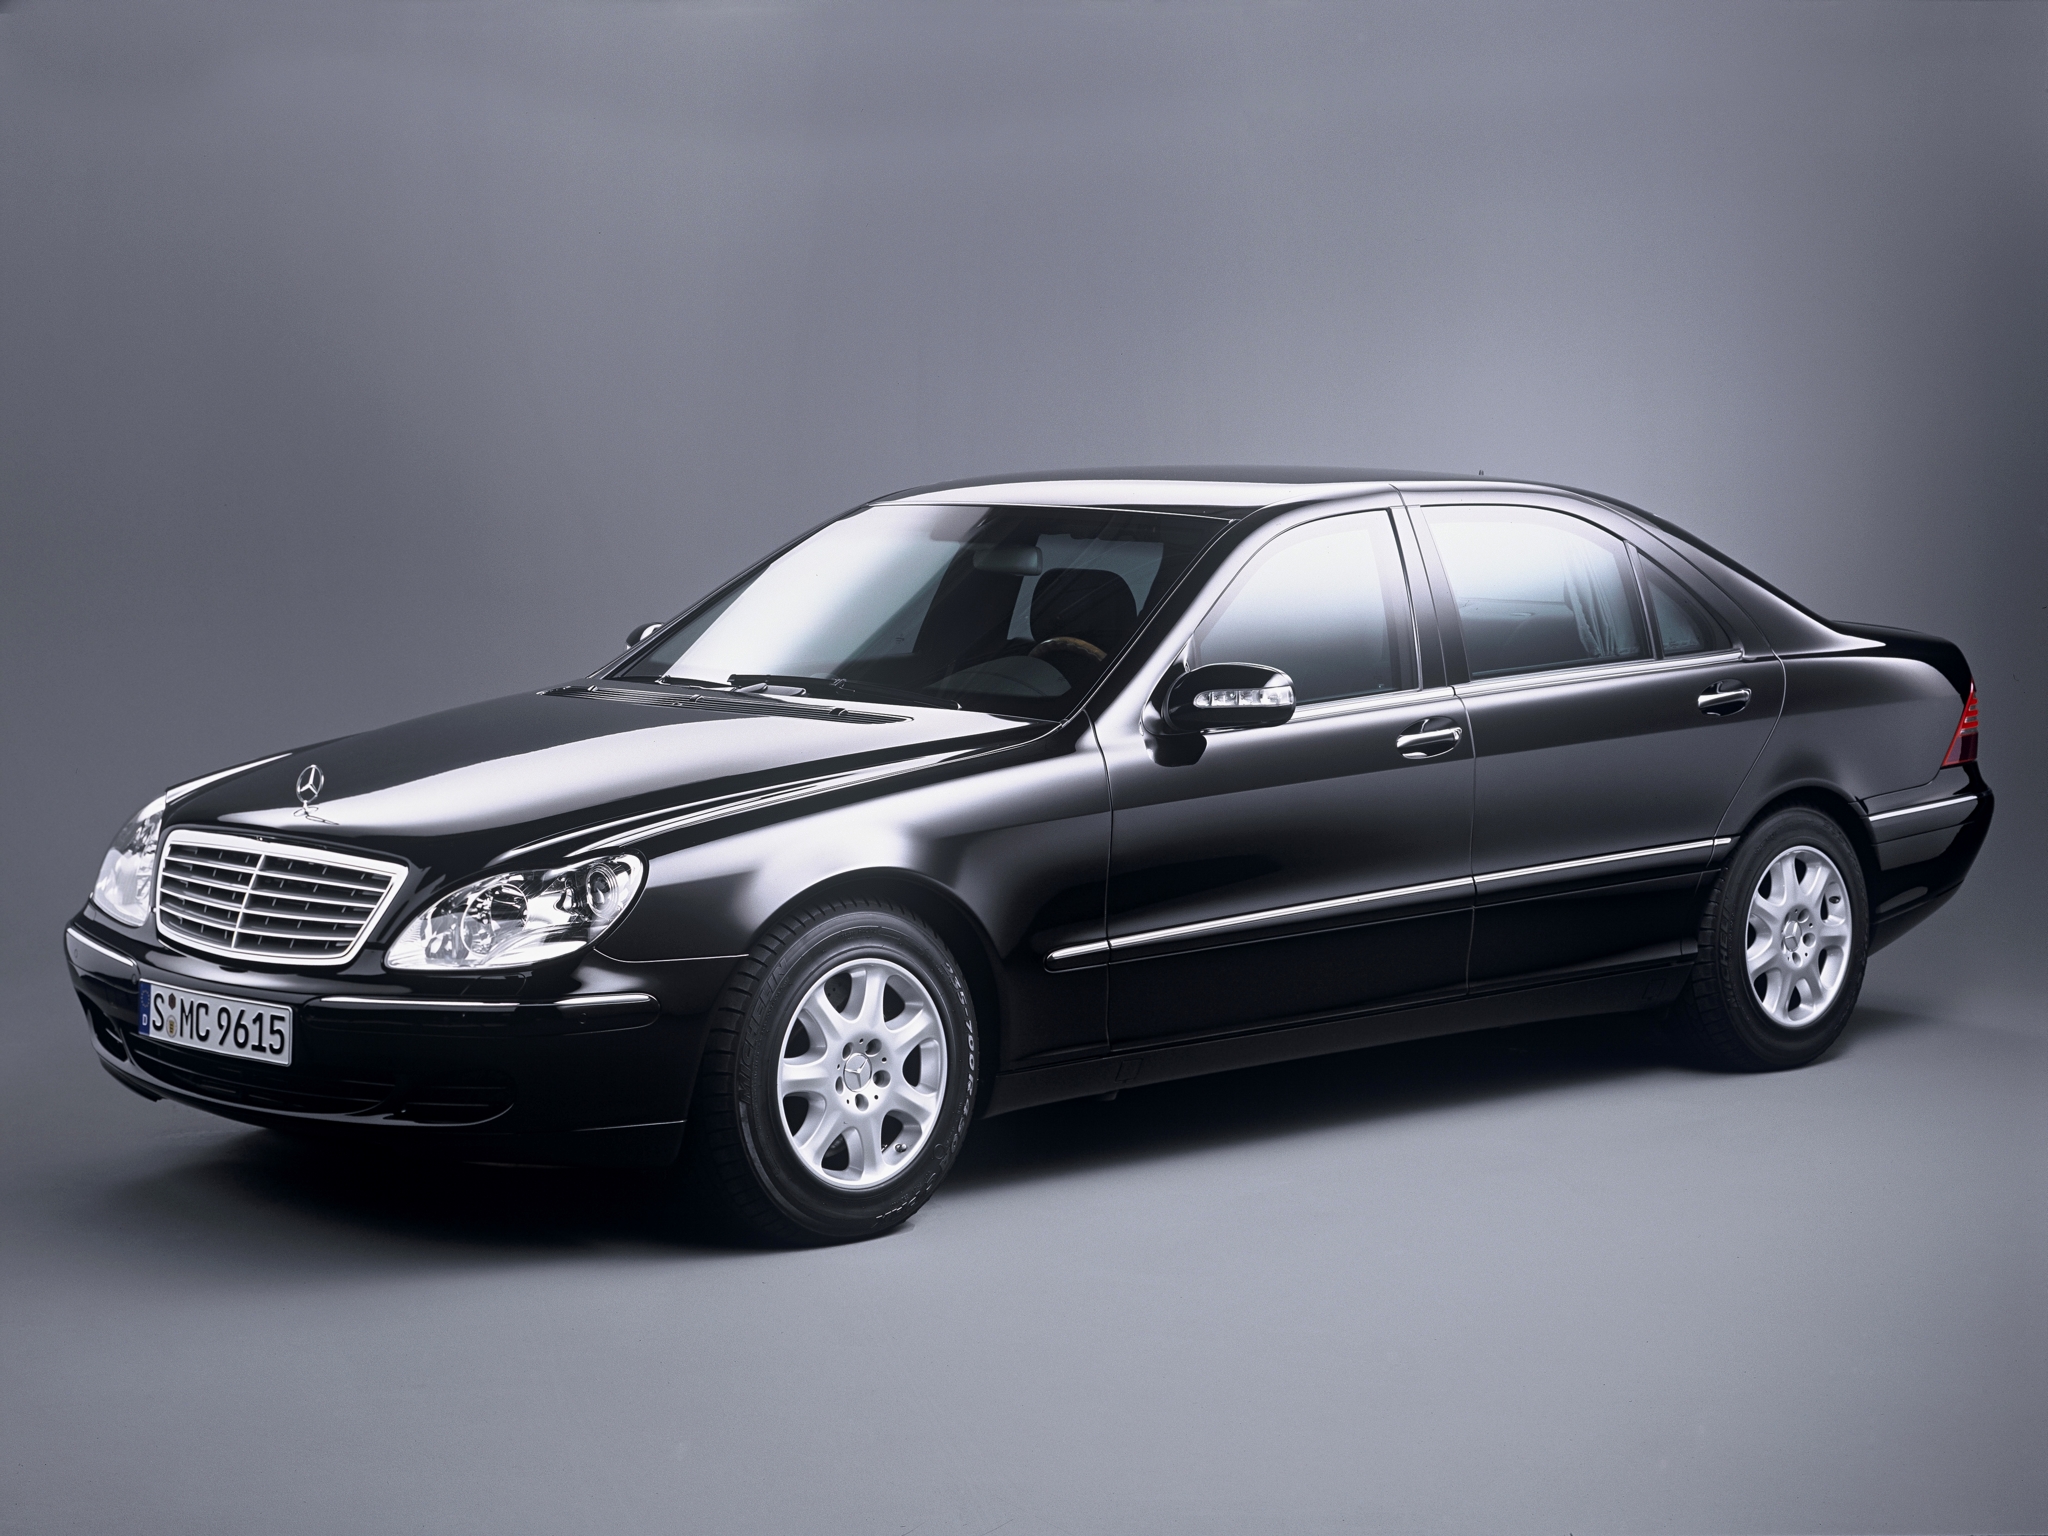 20, 02armored, Mercedes, Benz, S klasse, Guard, W220, Luxury Wallpaper